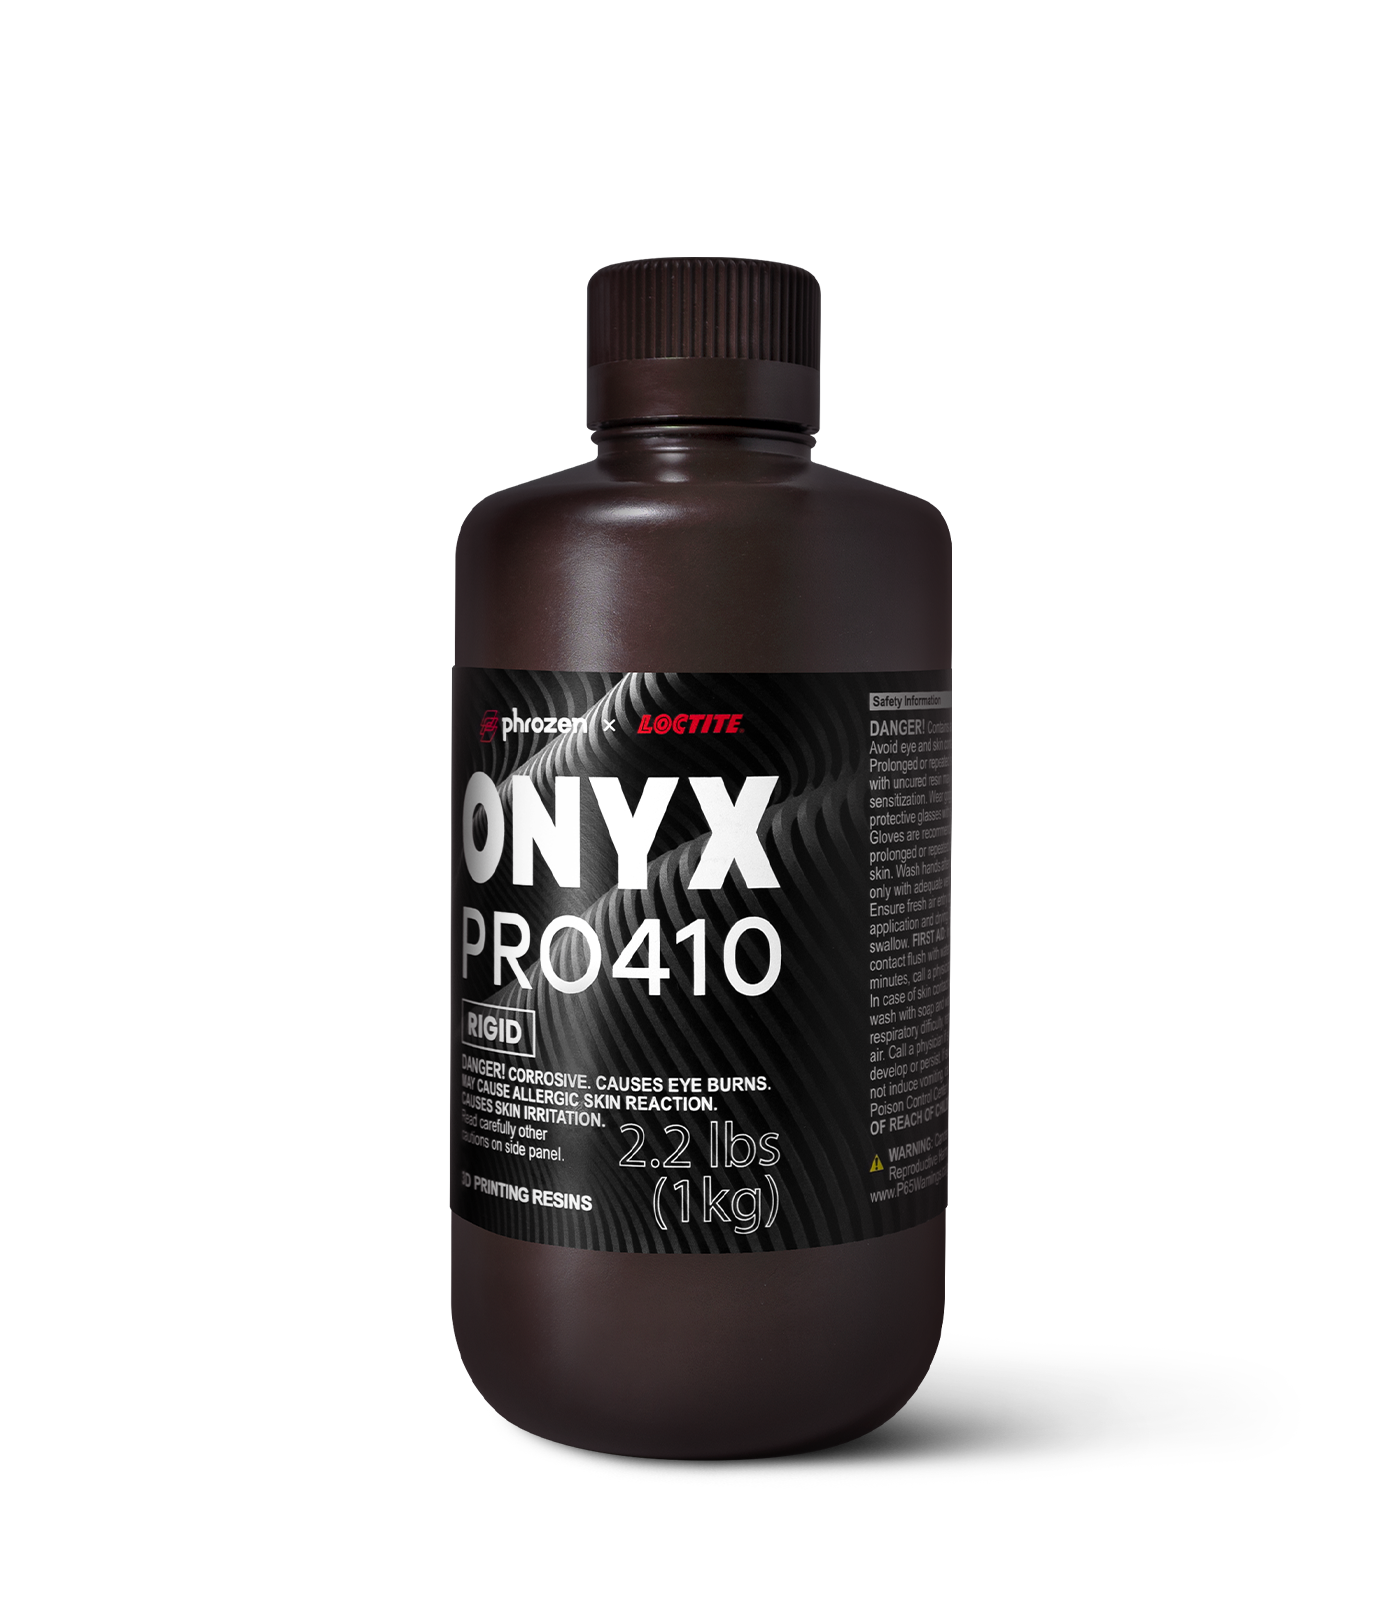 Onyx Rigid Pro410